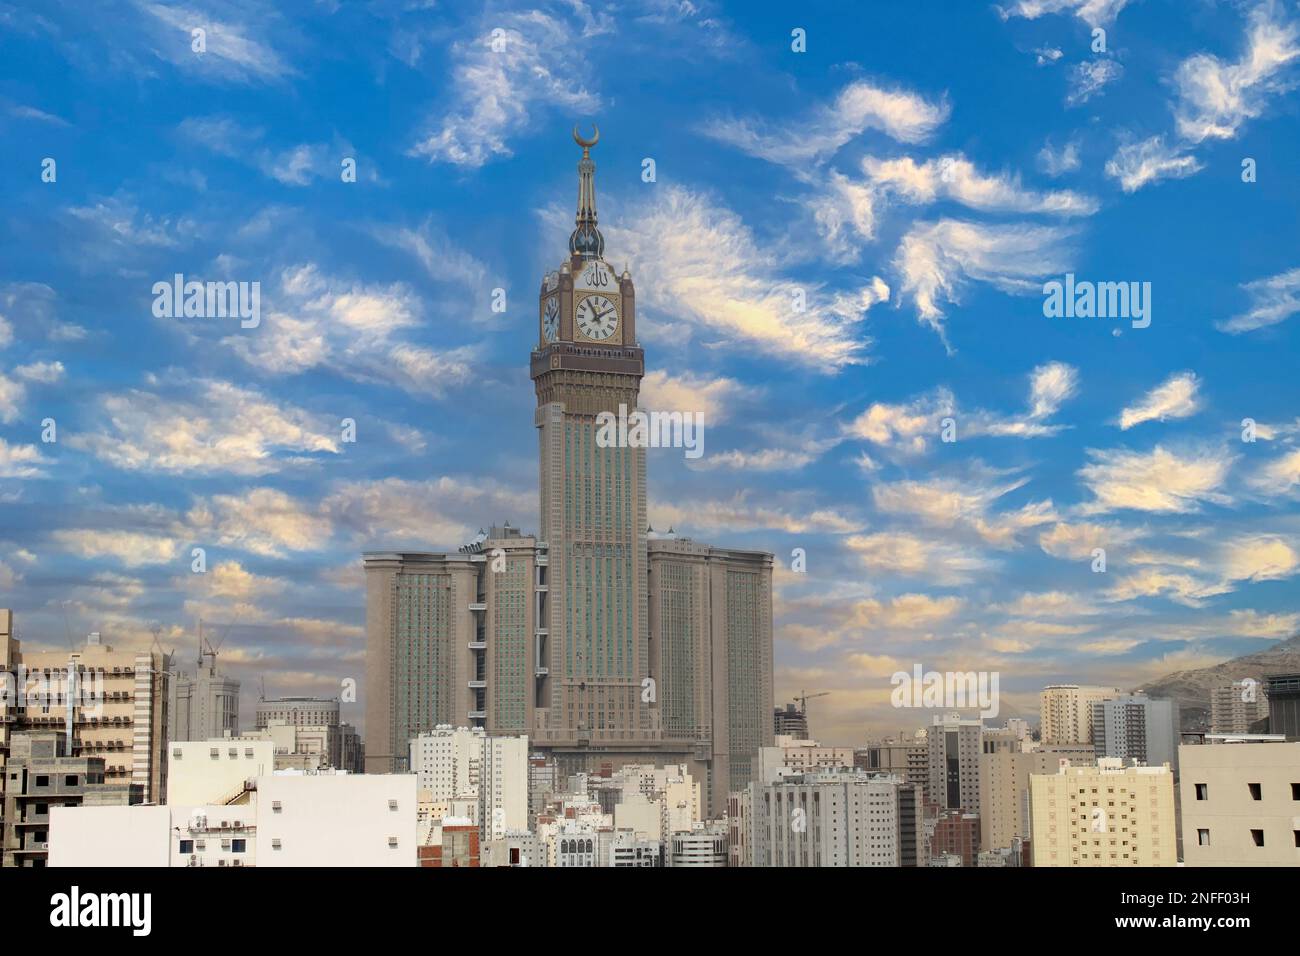 Royal Clock Tower Makkah in Makkah, Saudi Arabia.The tower is the tallest clock tower in the world at 601 meter. It is the world's tallest clock tower Stock Photo